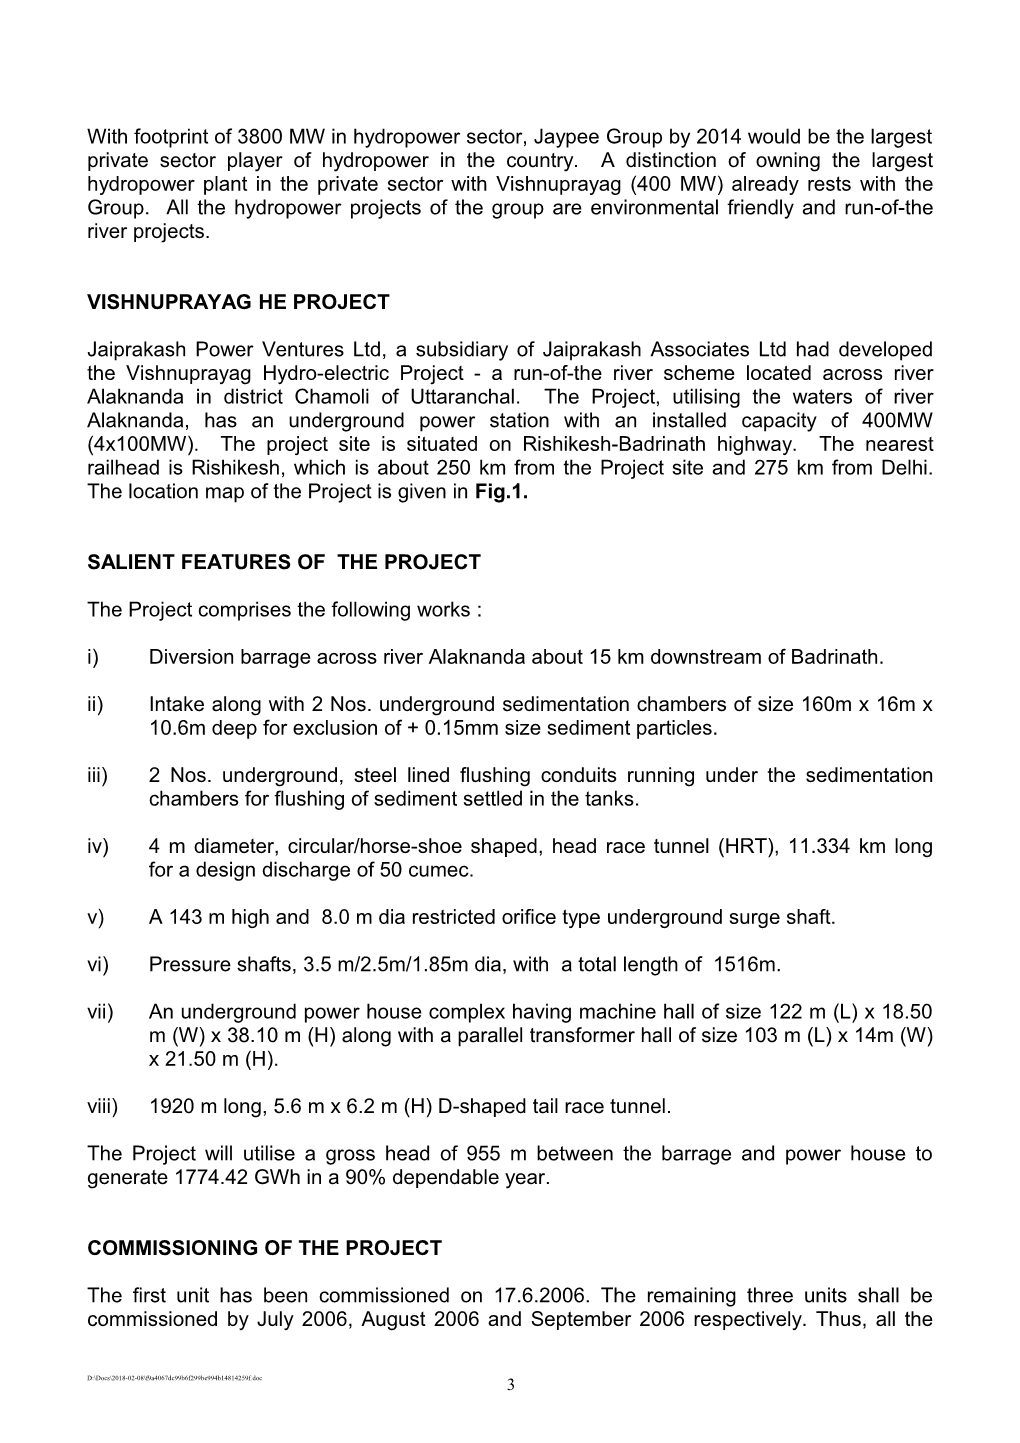 Vishnuprayag Hydro-Electric Project (4X100mw)